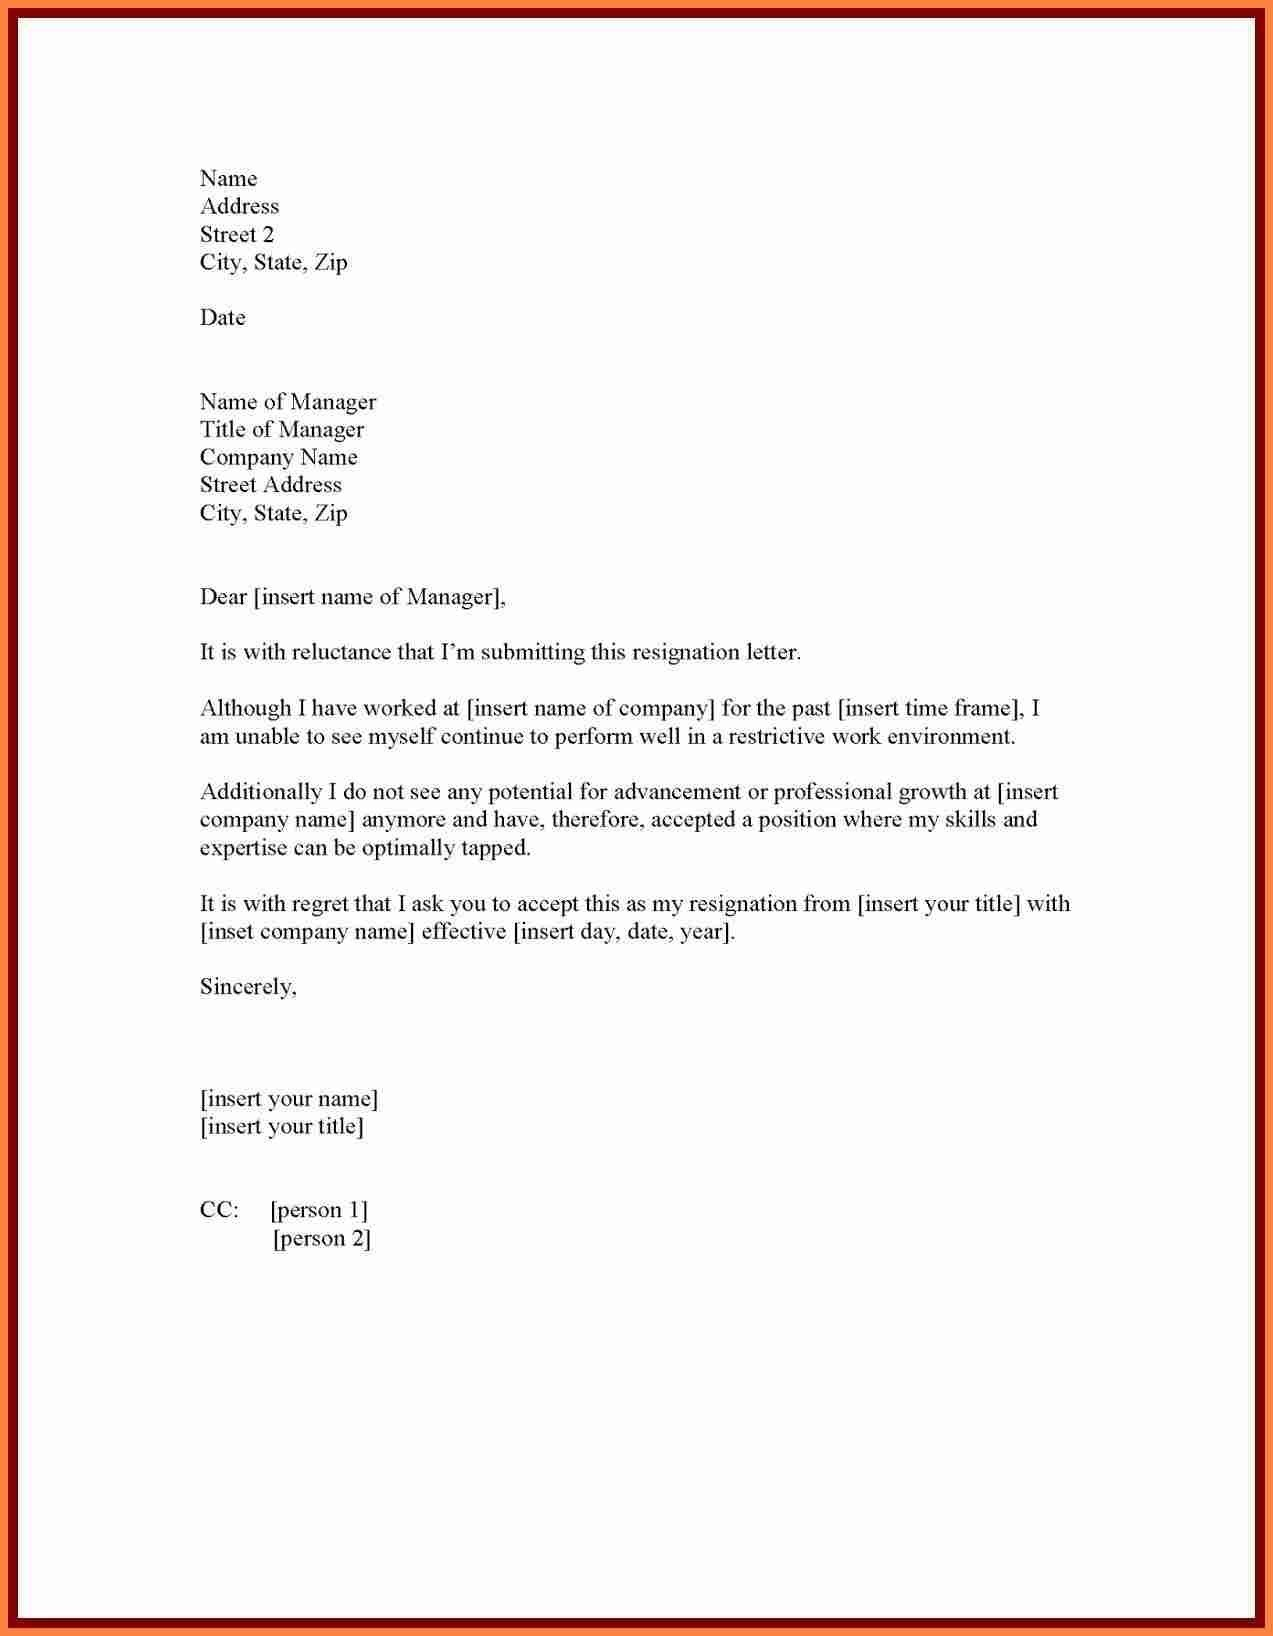 Professional Resignation Letter Template - Resignation Letter New Job Opportunity Refrence formal Resignation